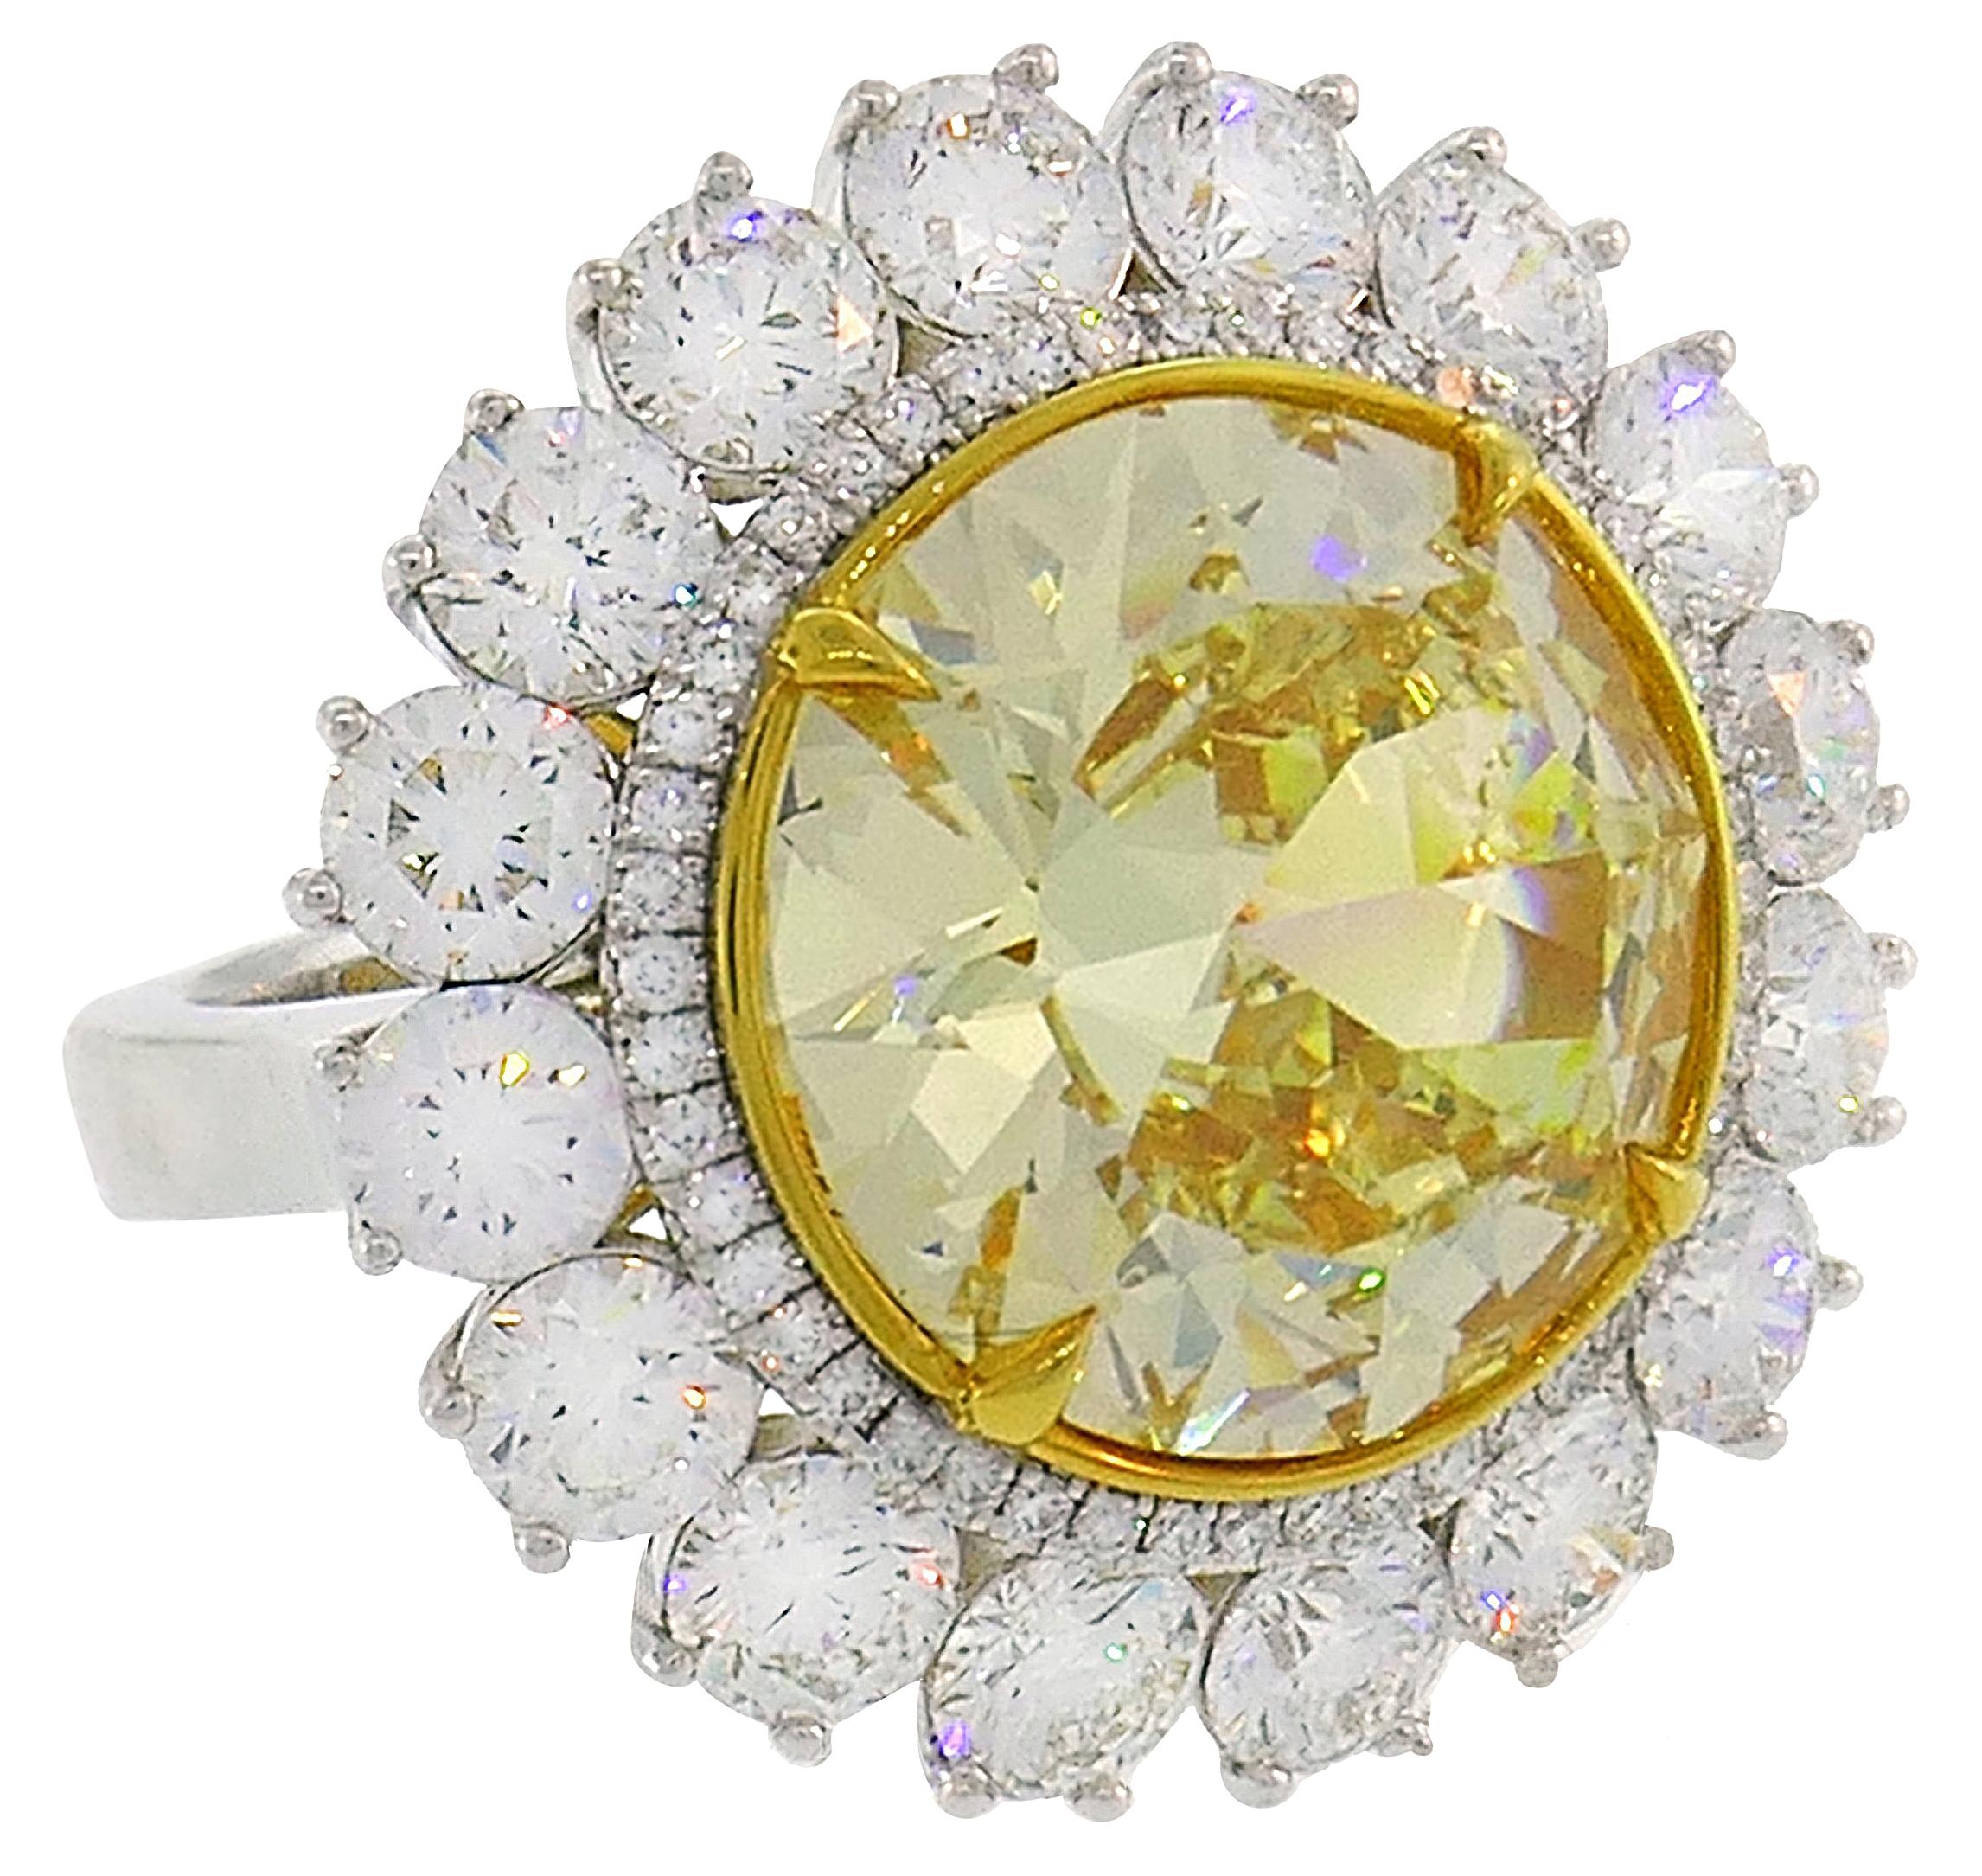 Fancy Intense Yellow Diamond White Gold Ring 10.04 Carat VS2 GIA